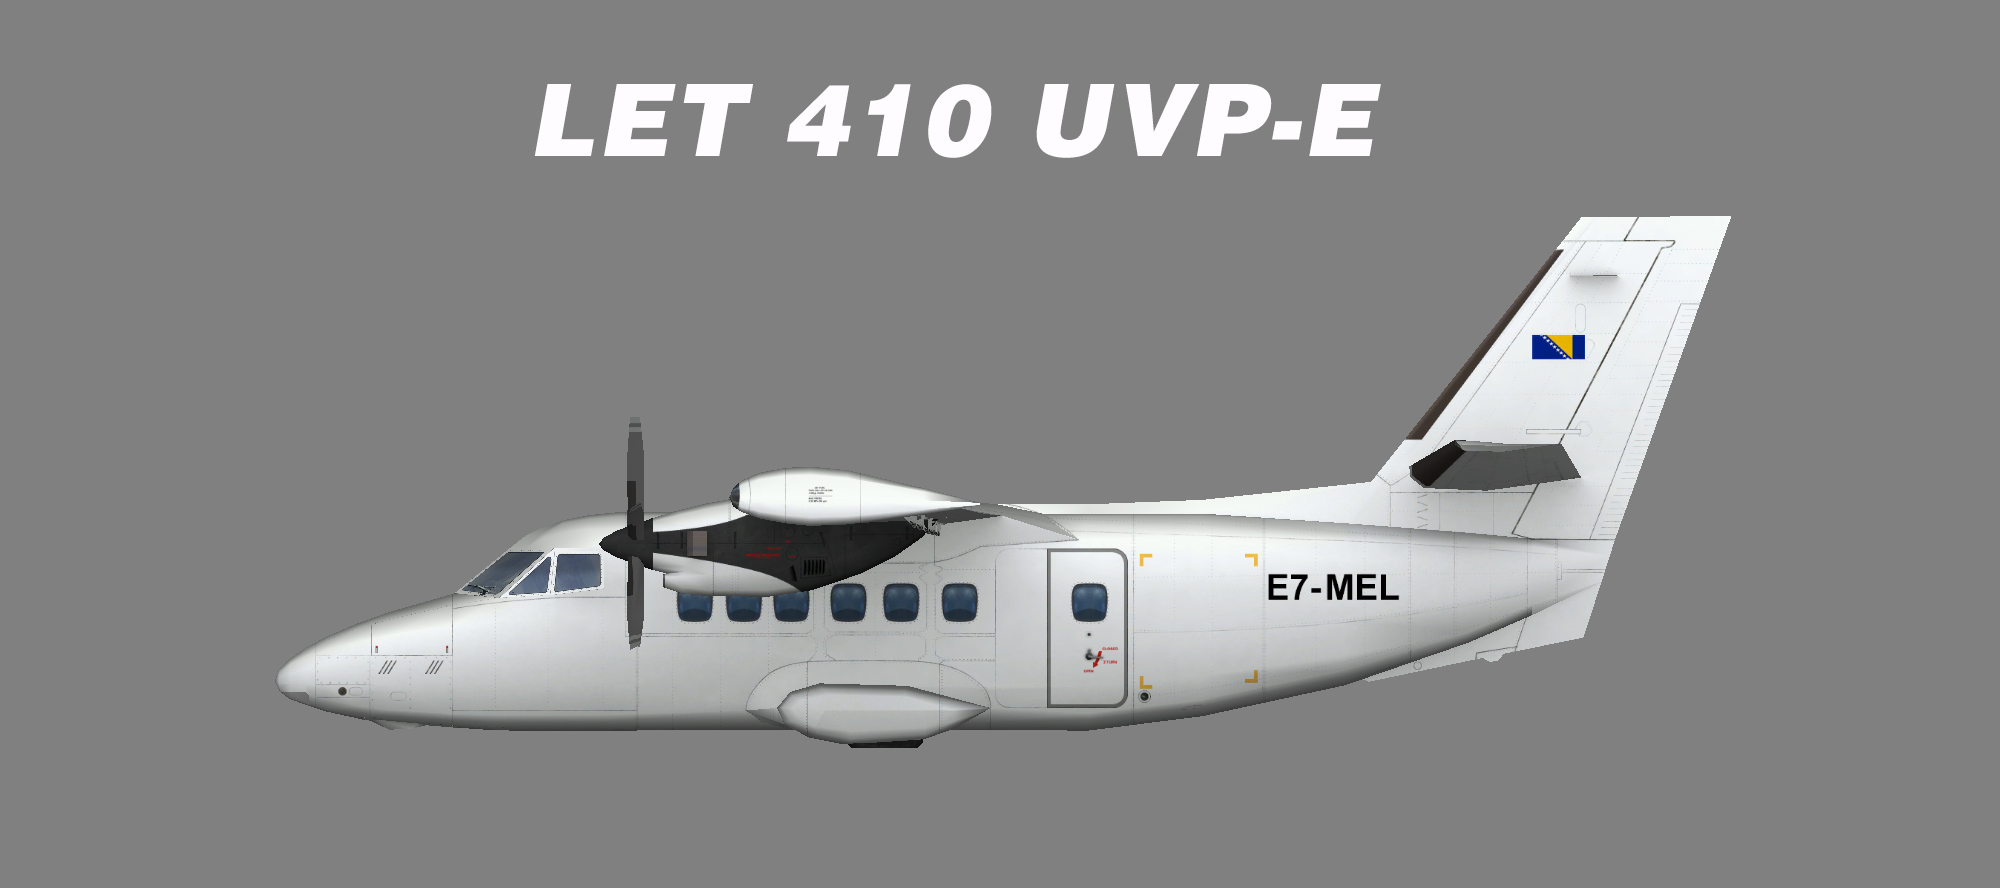 Air let. Л 410 сбоку. Л410 FS 2004. Let 410 UVP-e20 схема салона. Аэркул АИР Ван.